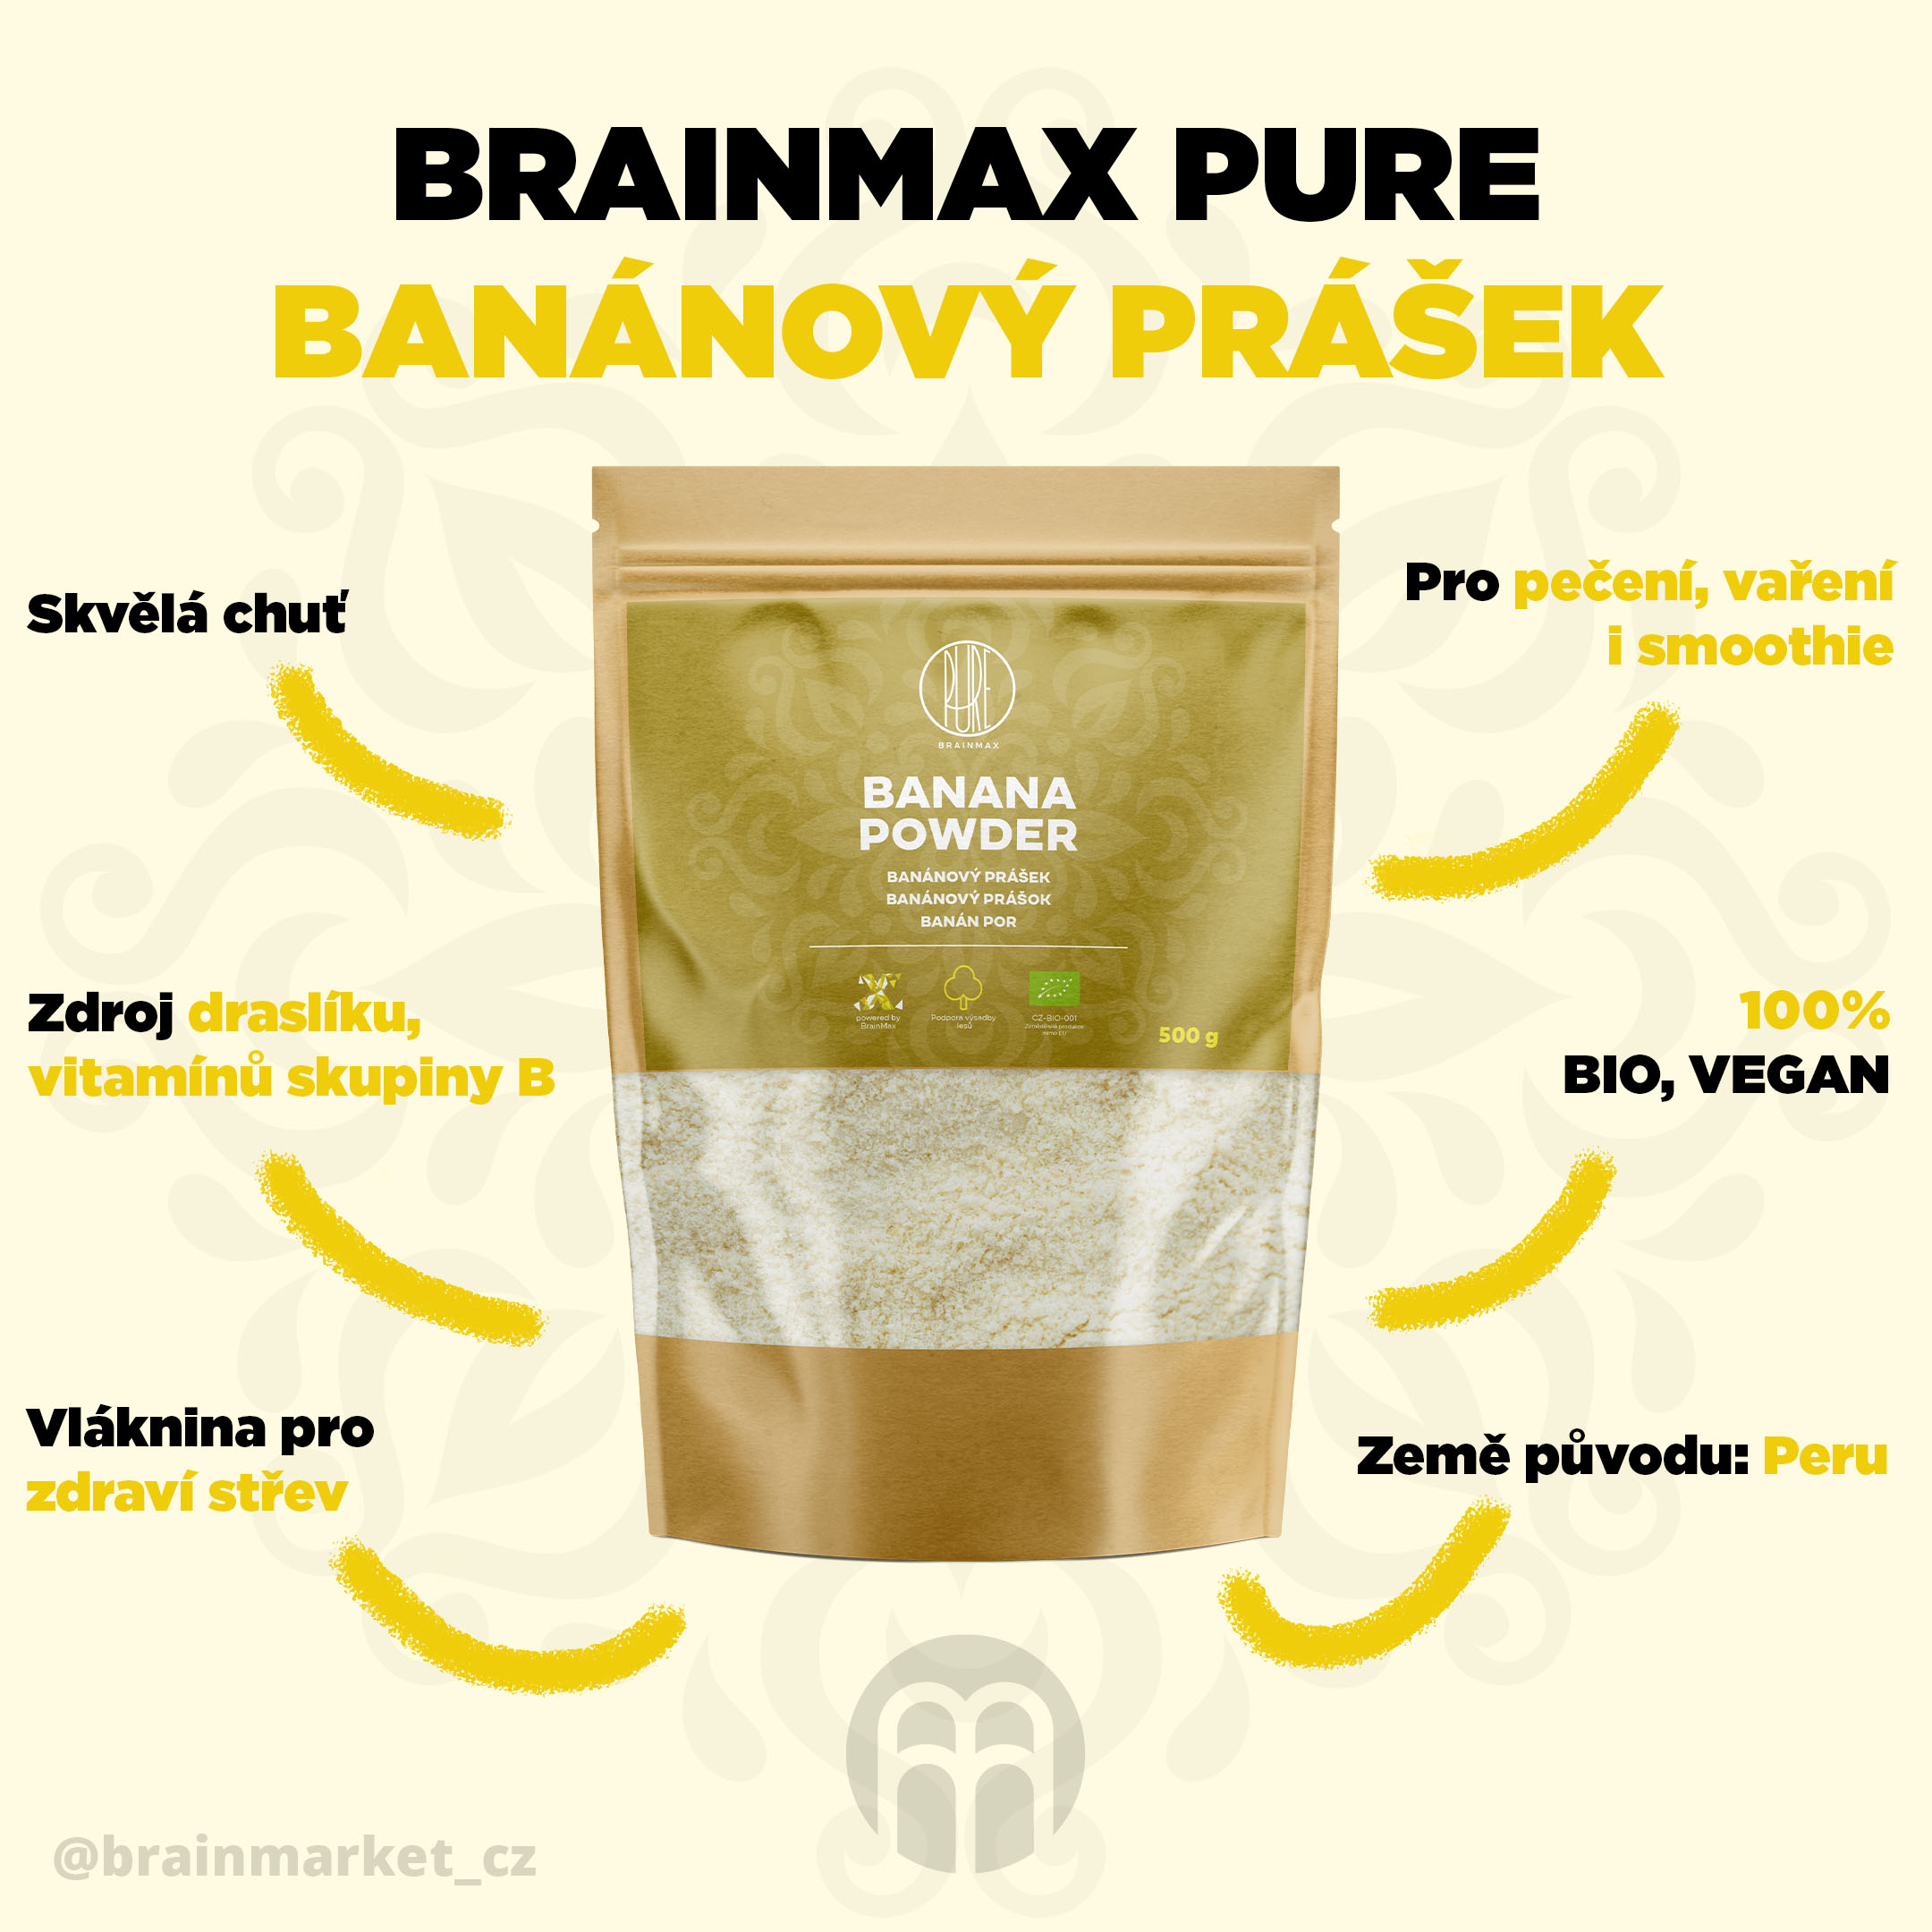 brainmax pure bananovy prasek infografika brainmarket CZ (1)